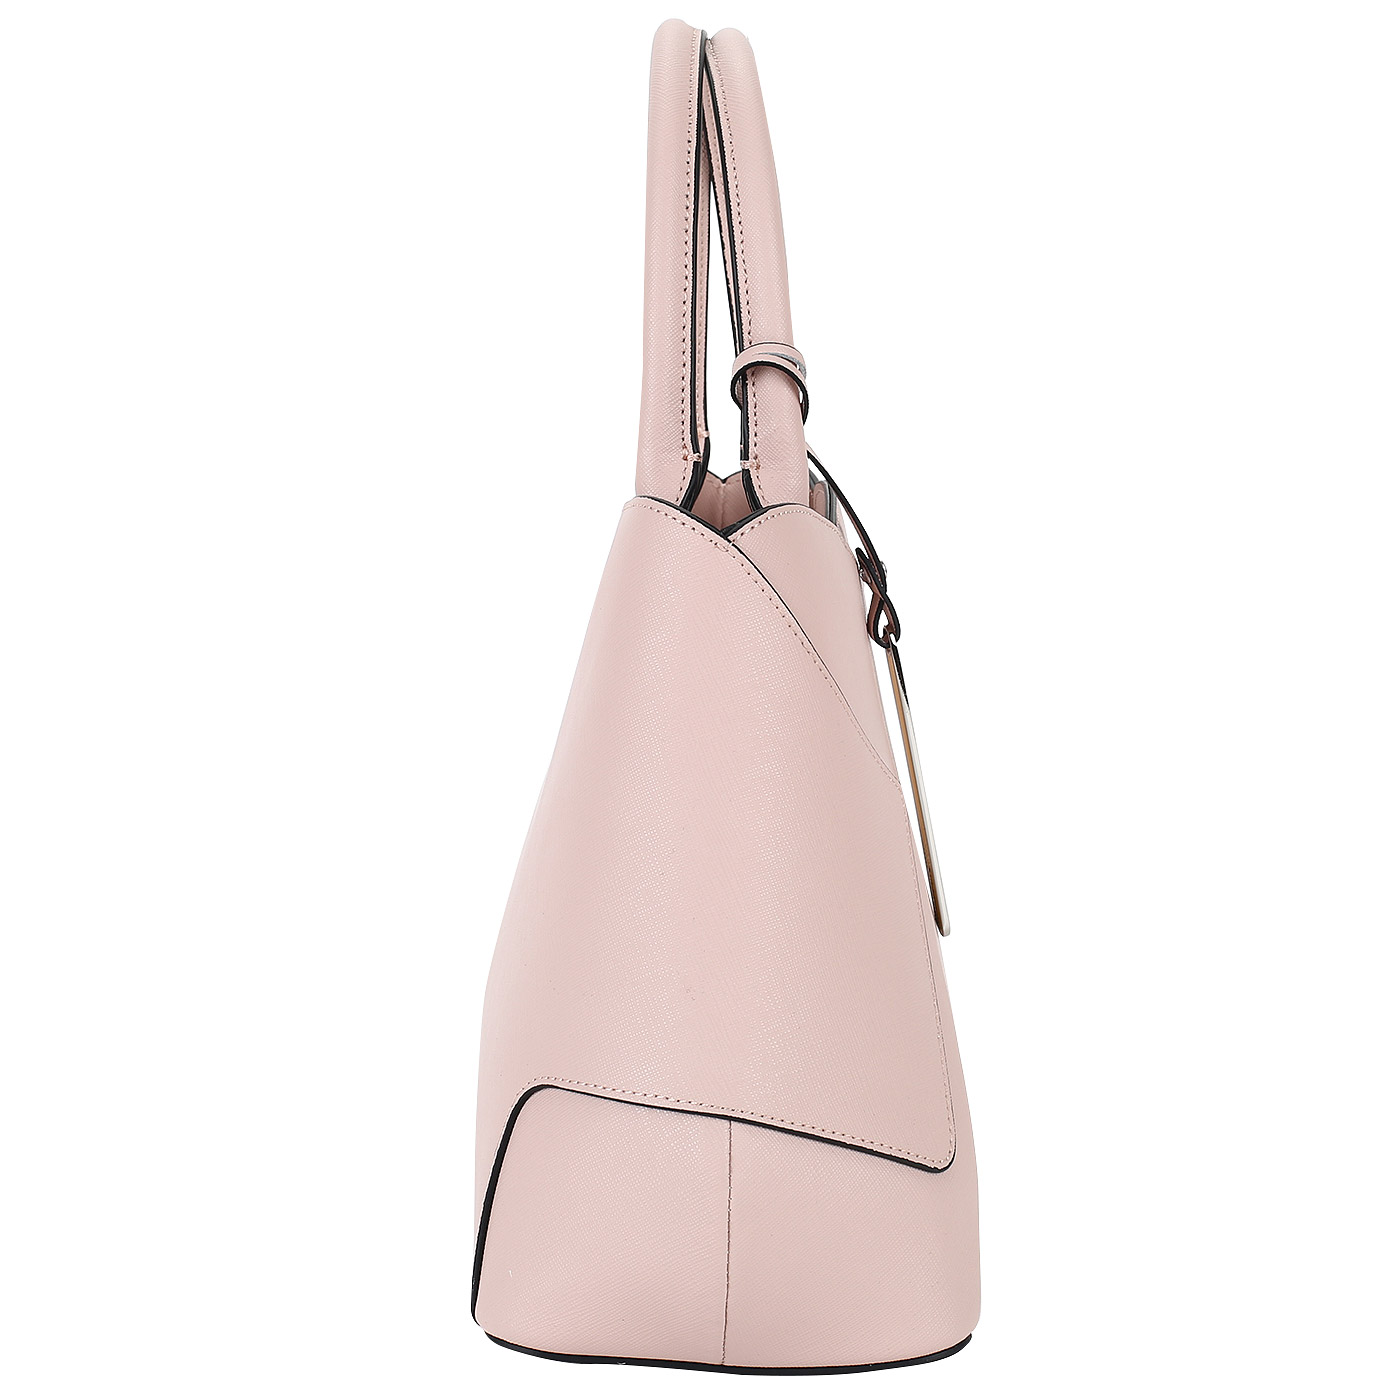 Кожаная сумка со съемным плечевым ремешком Cromia Wisper